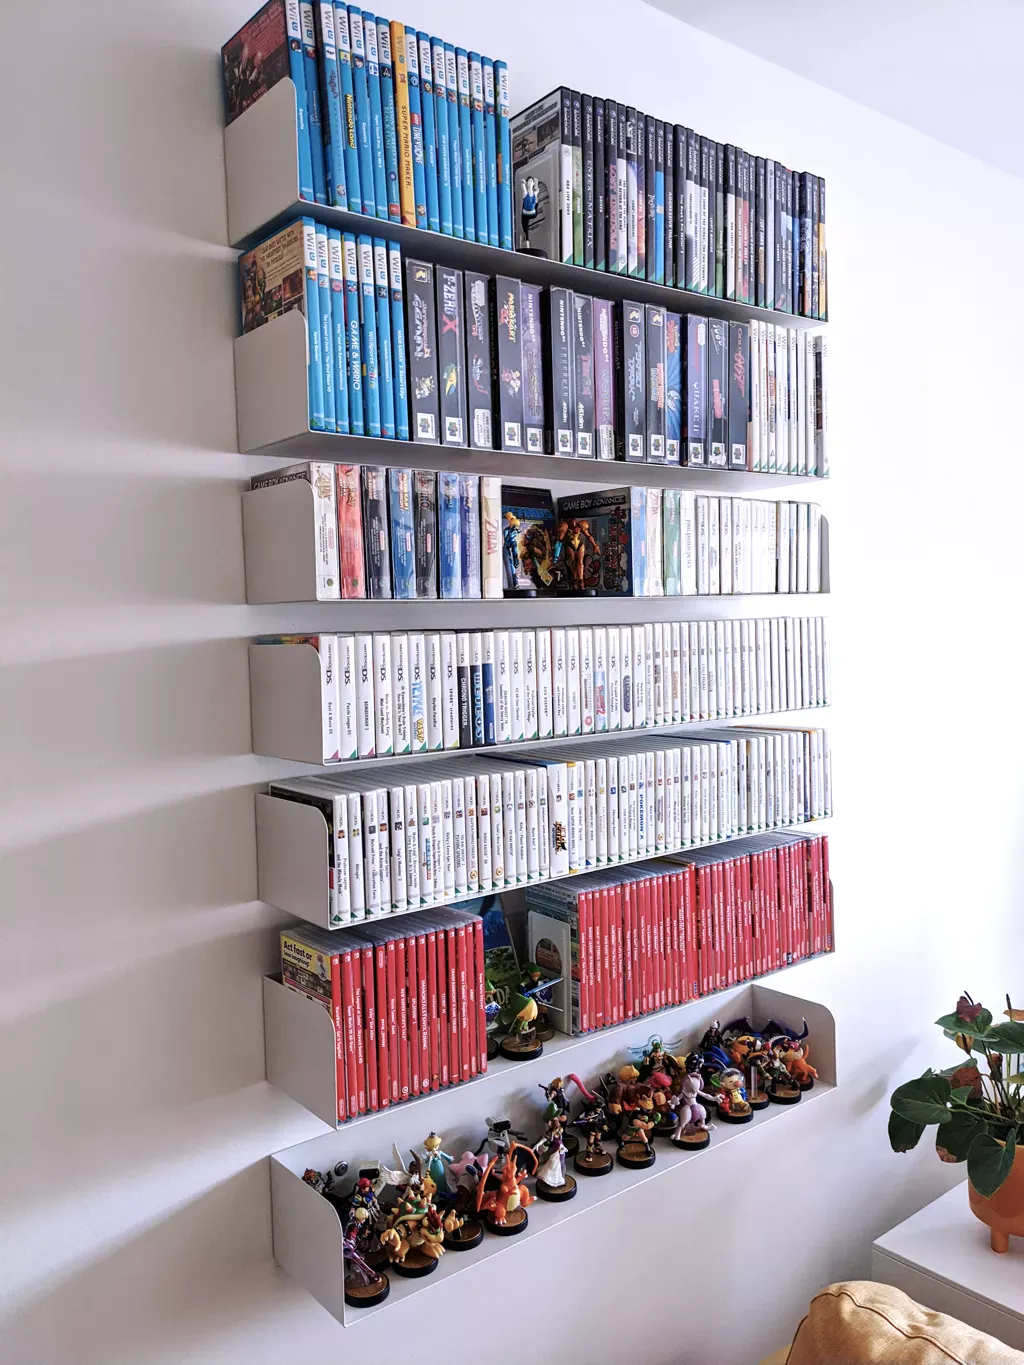 Game shelf